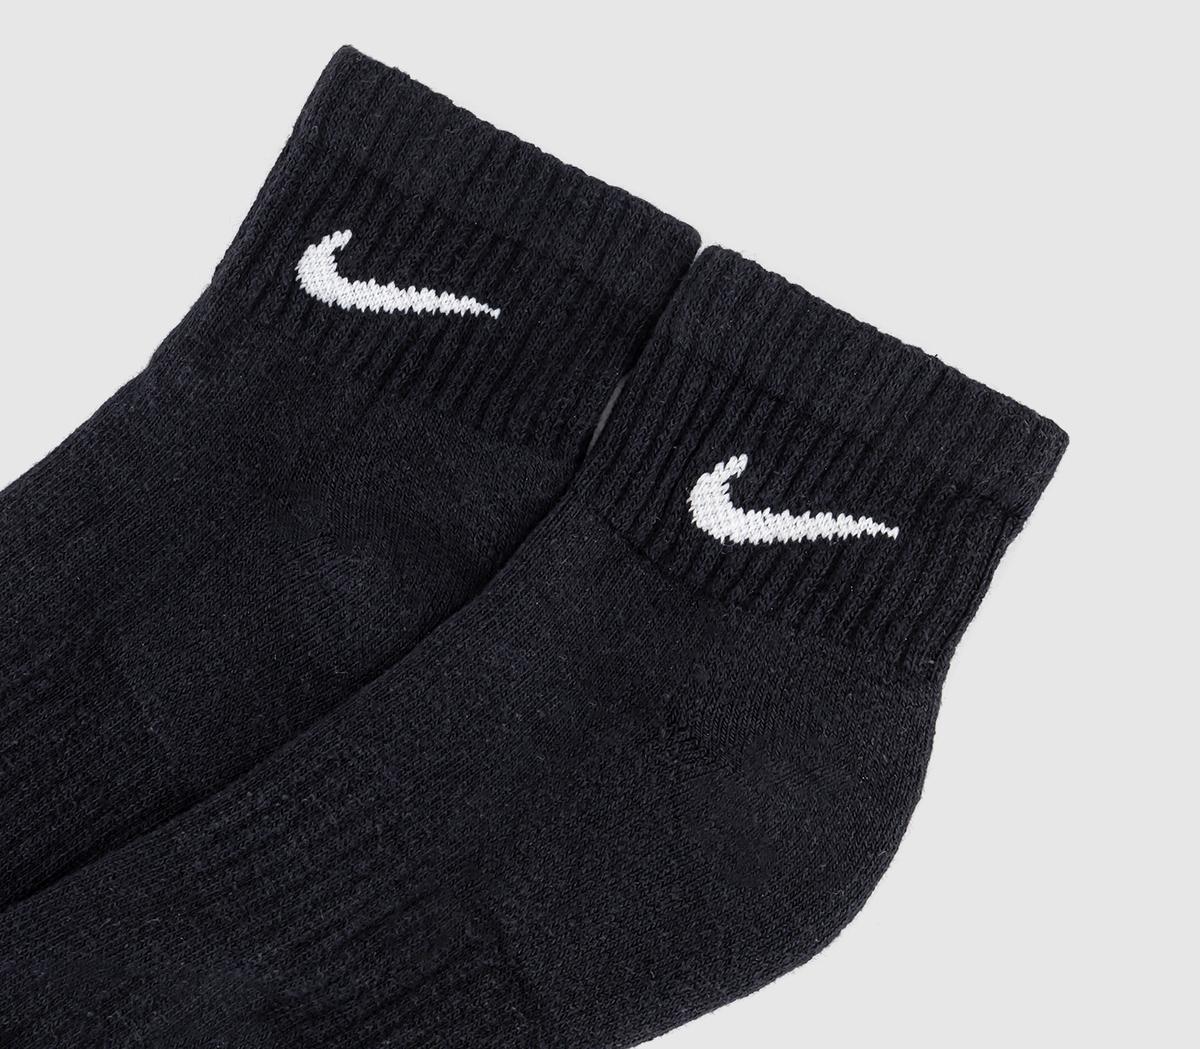 Nike Training Ankle Socks 6 Pairs Black White - Socks